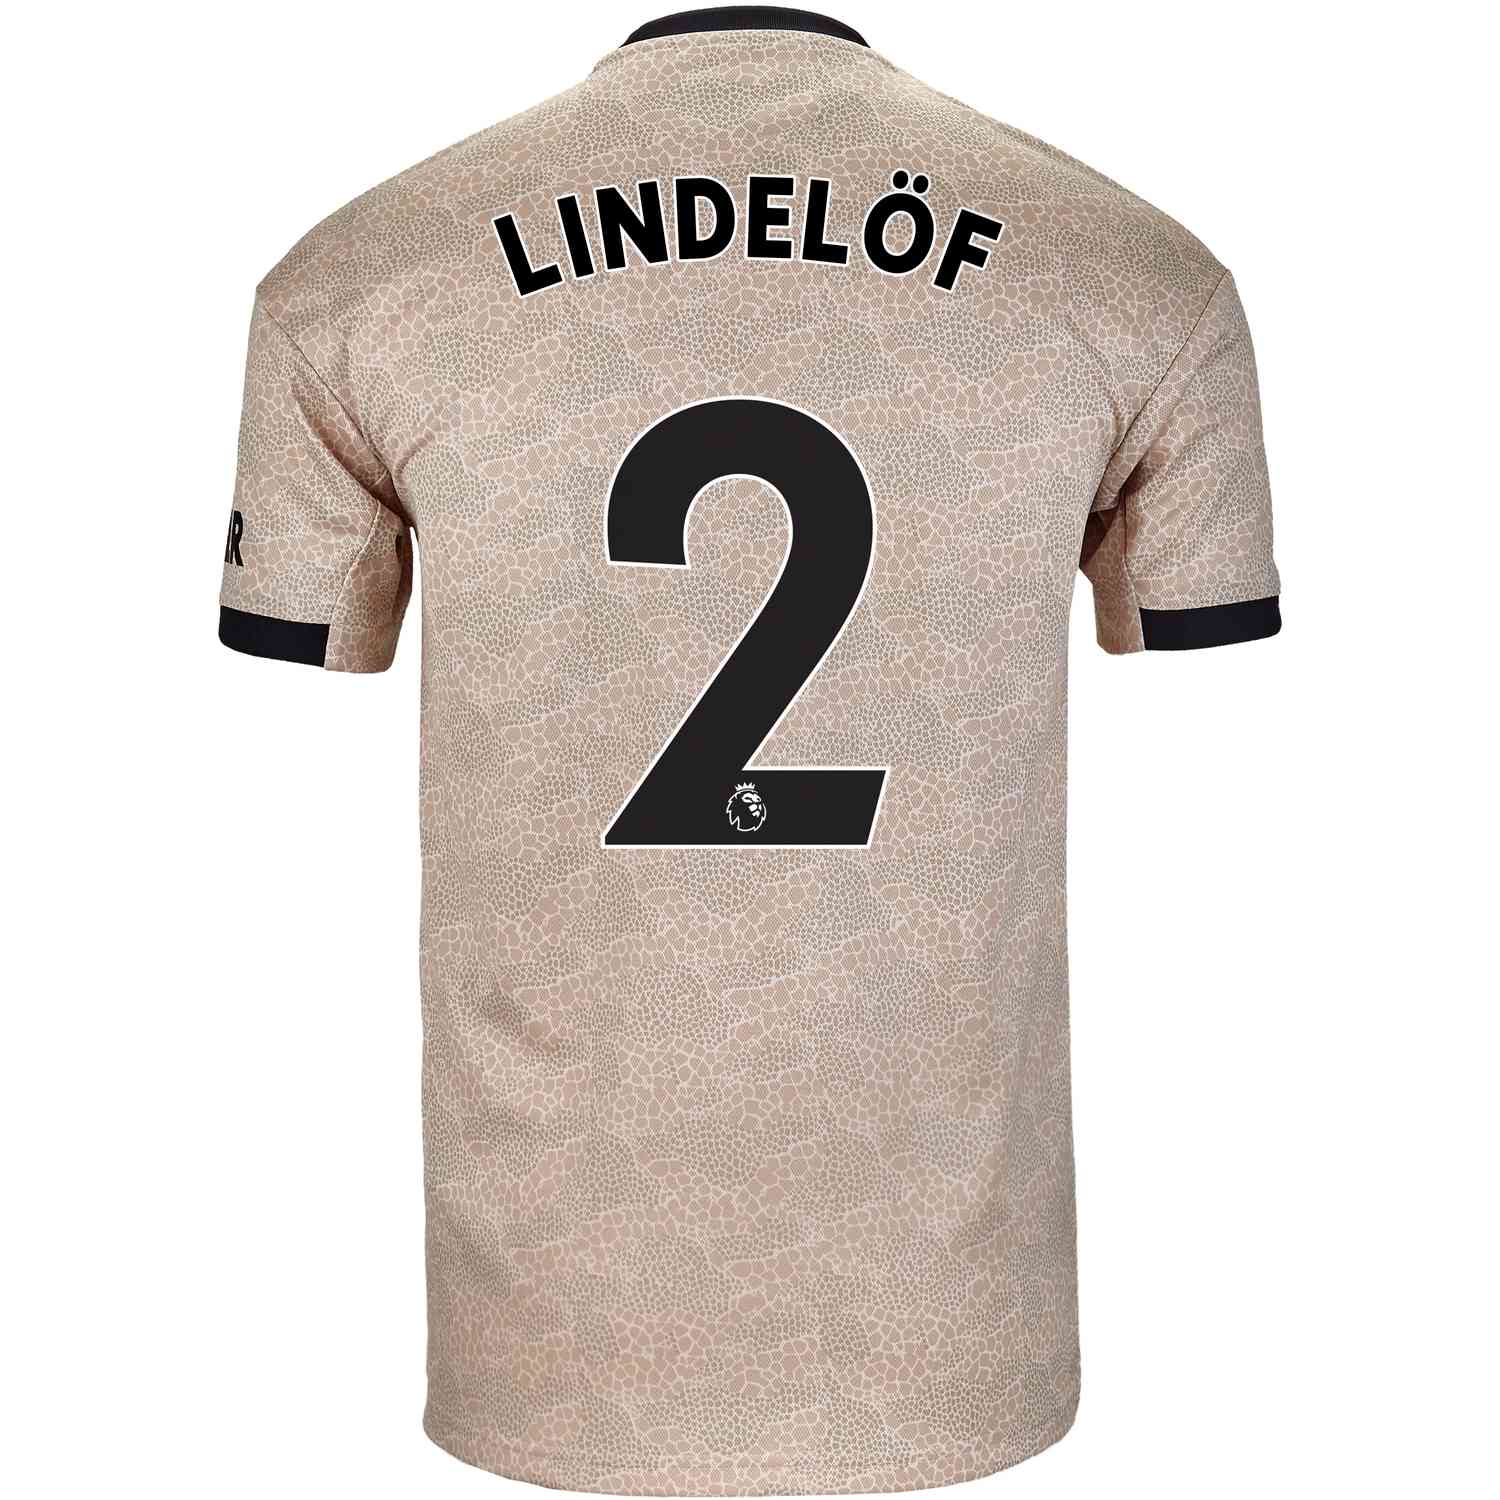 lindelof jersey number